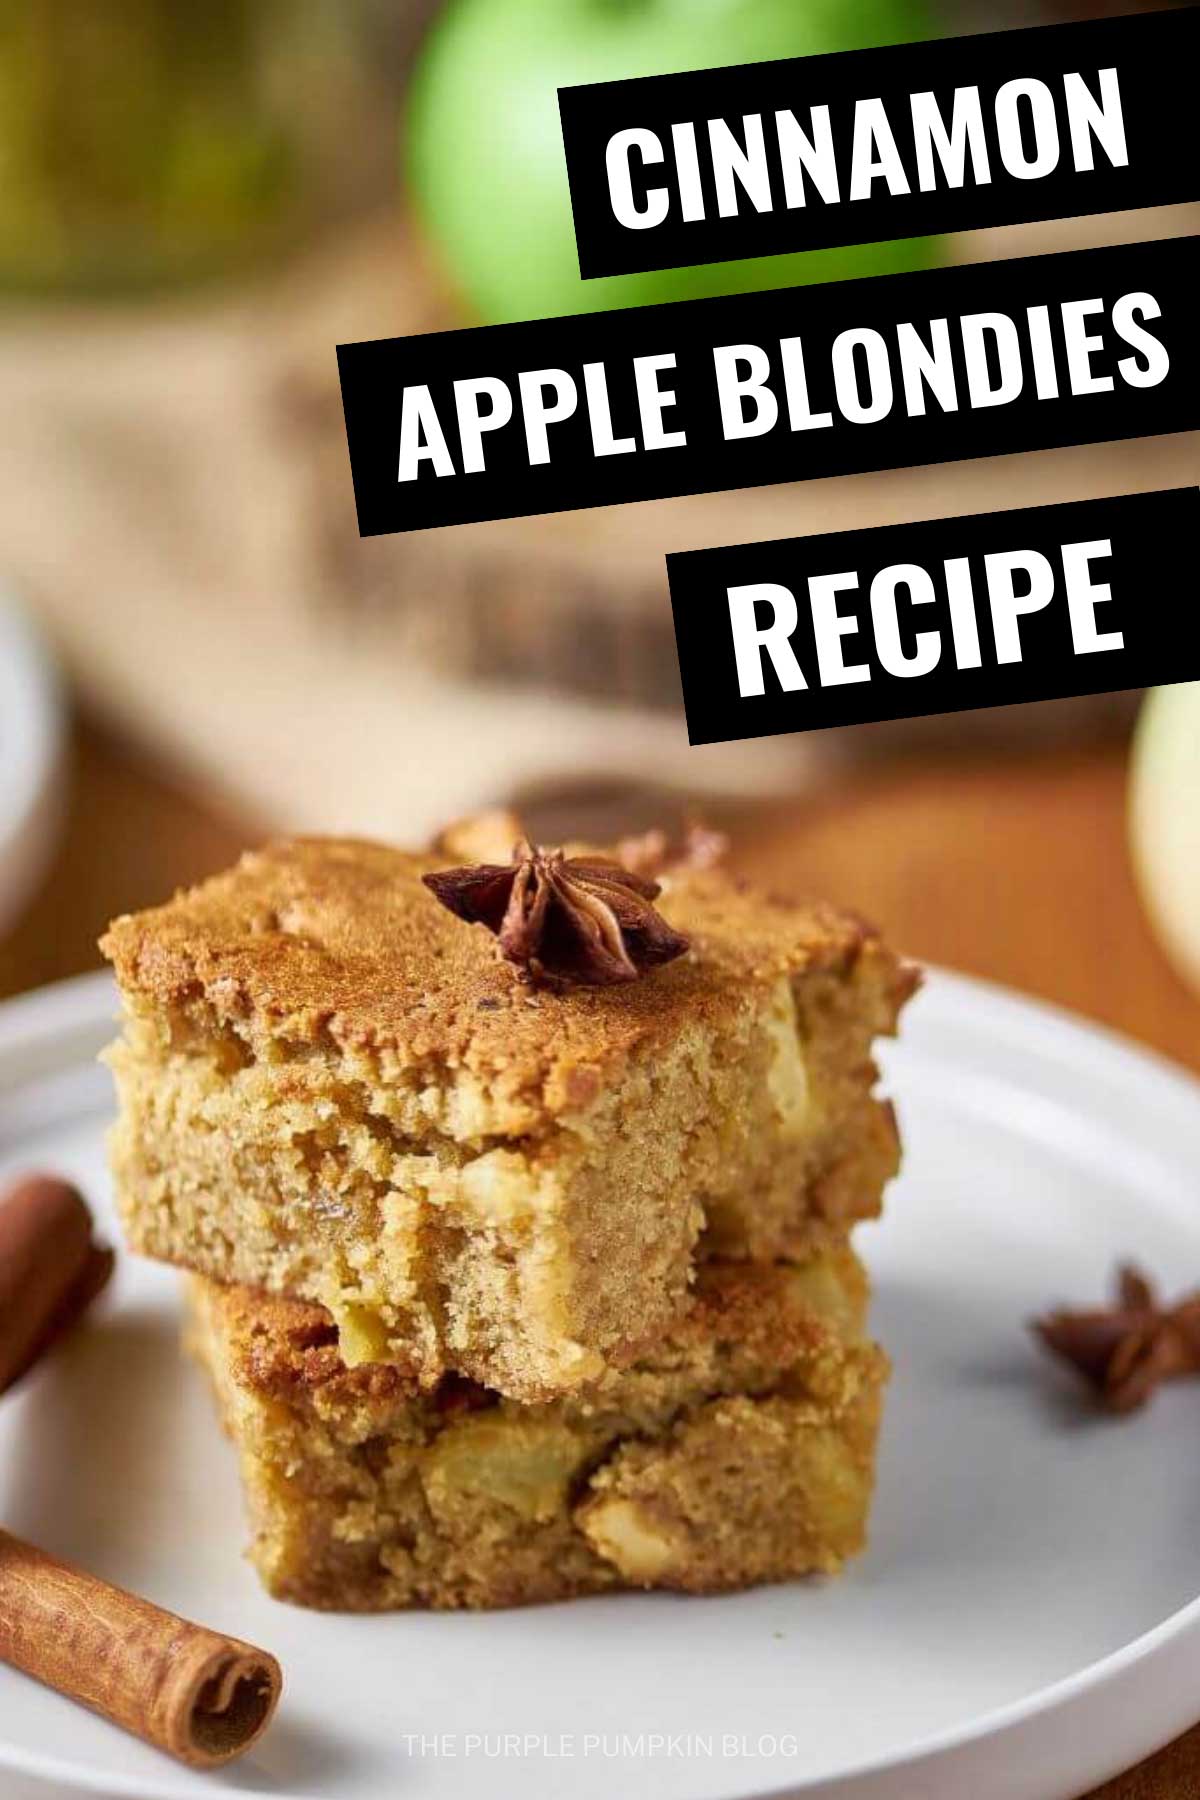 A-Cinnamon-Apple-Blondies-Recipe